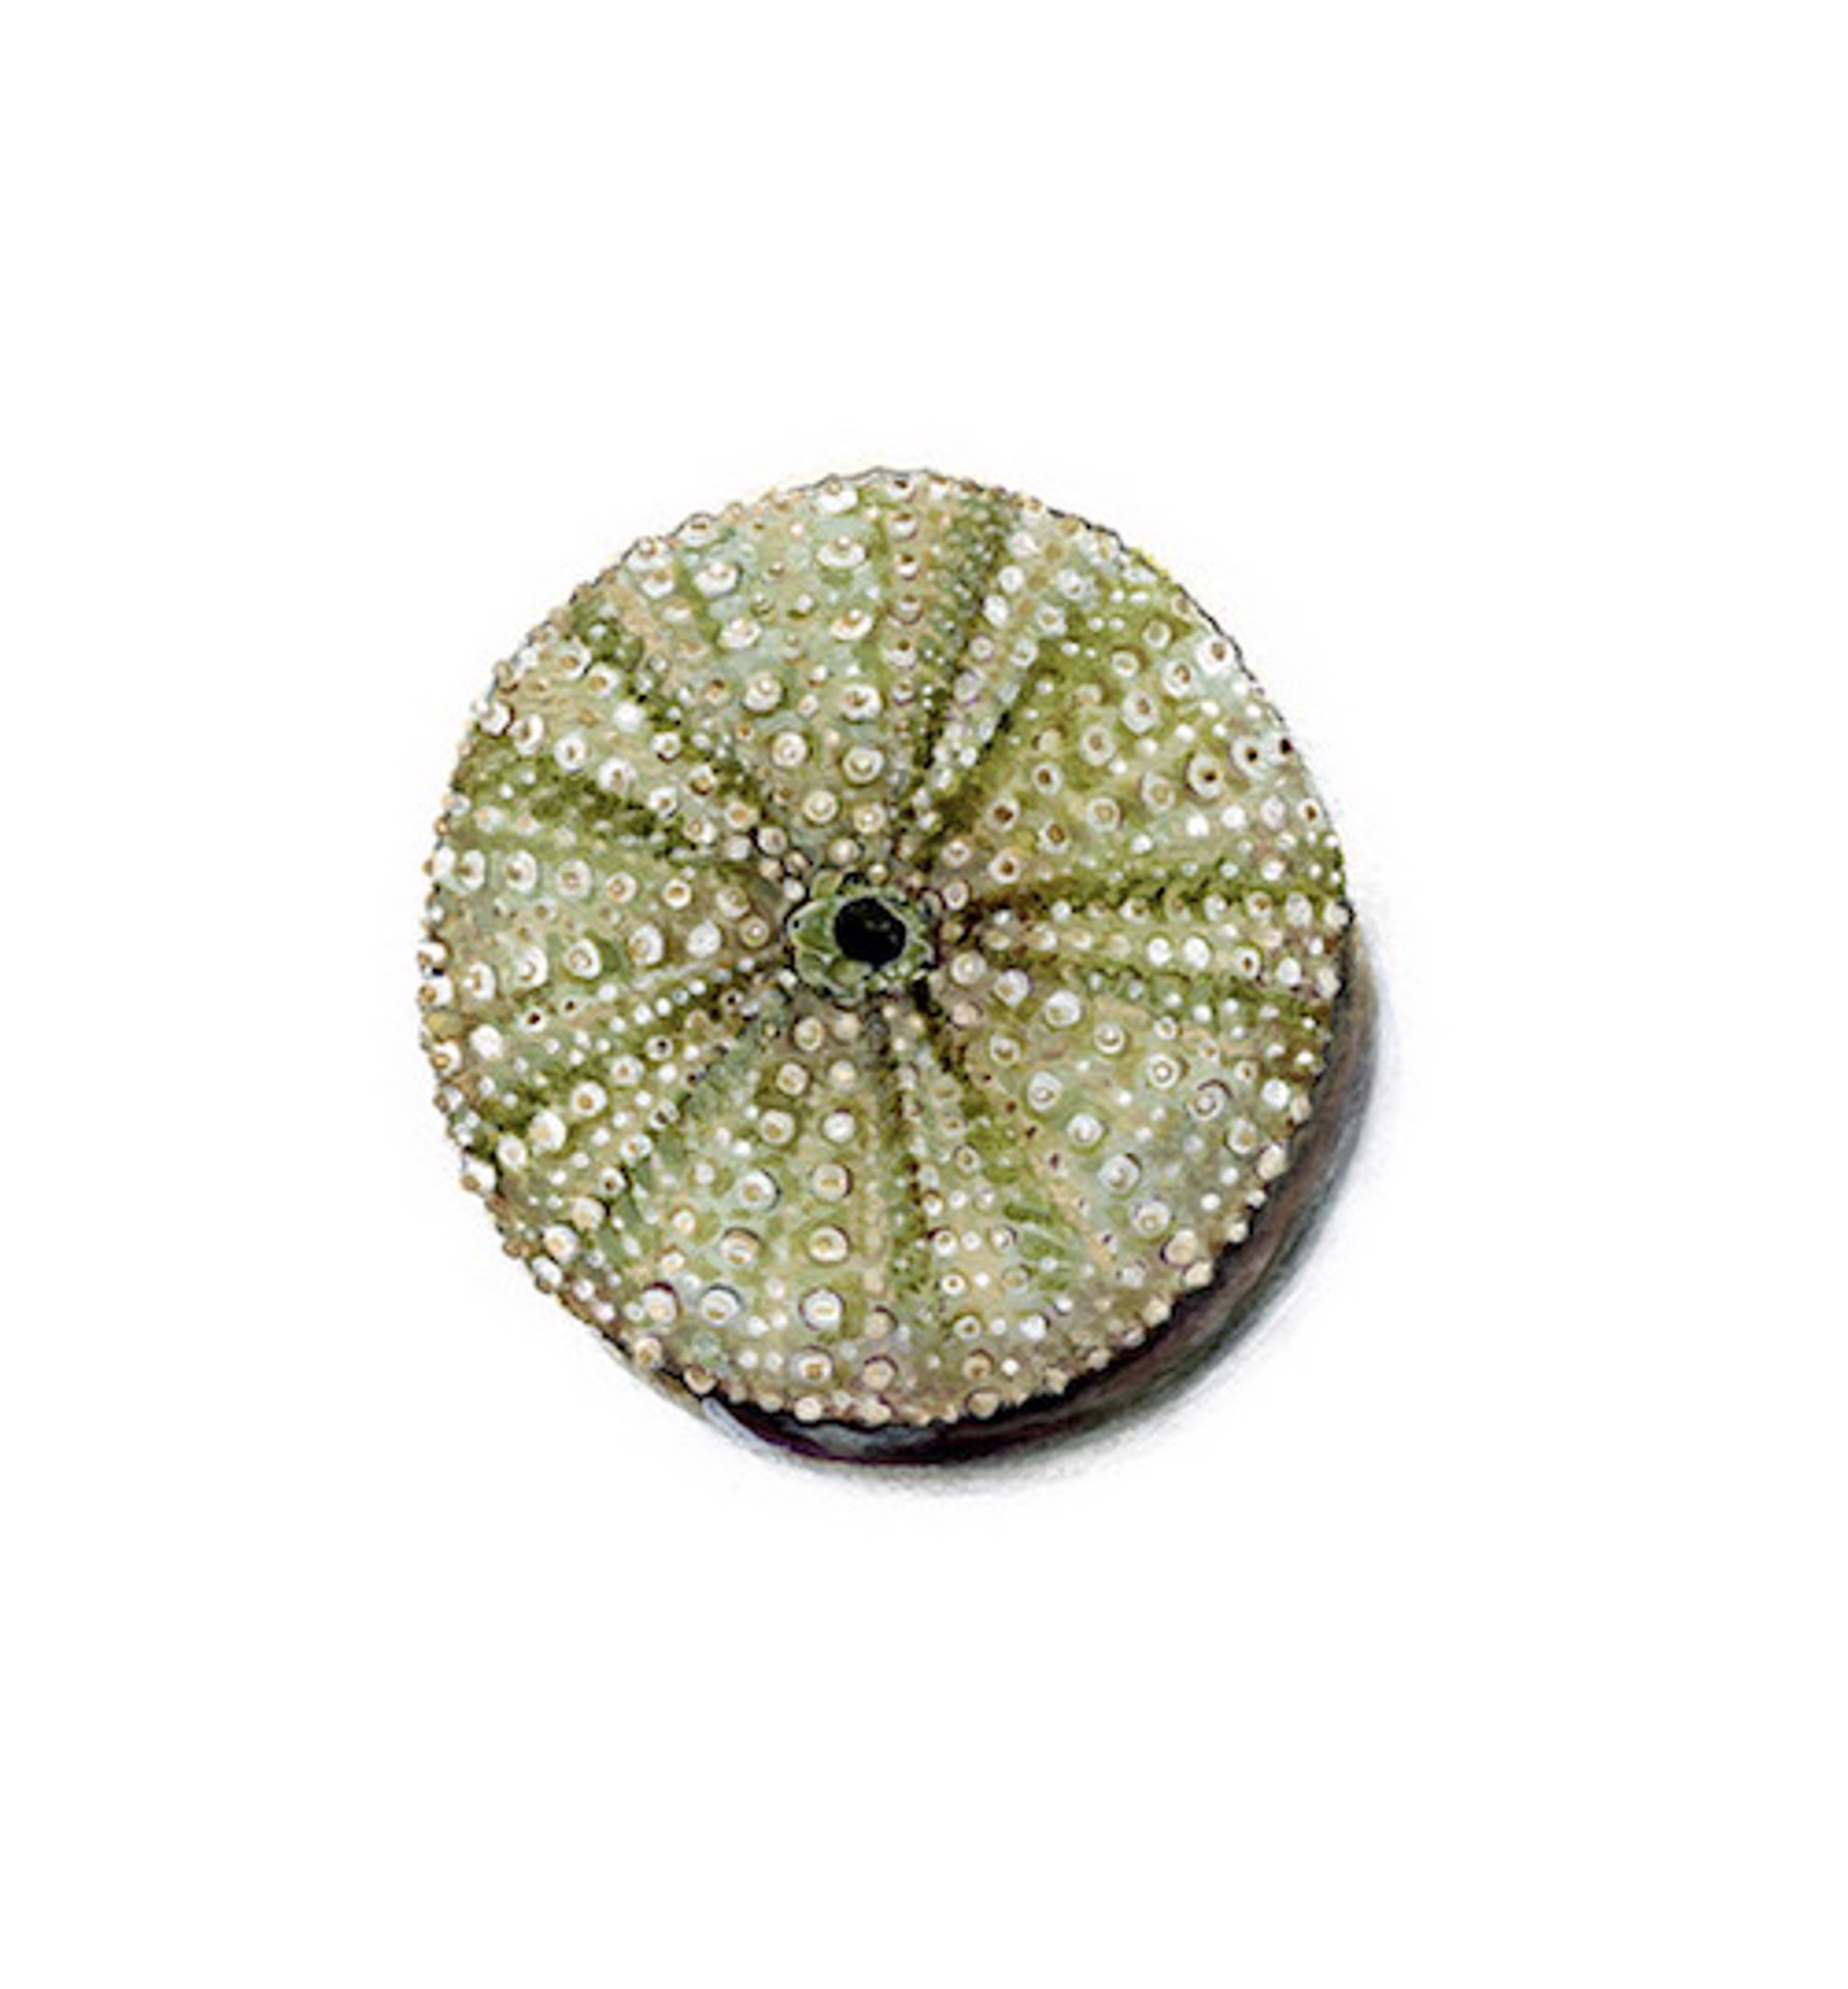 Sea Urchin by Jane Kim